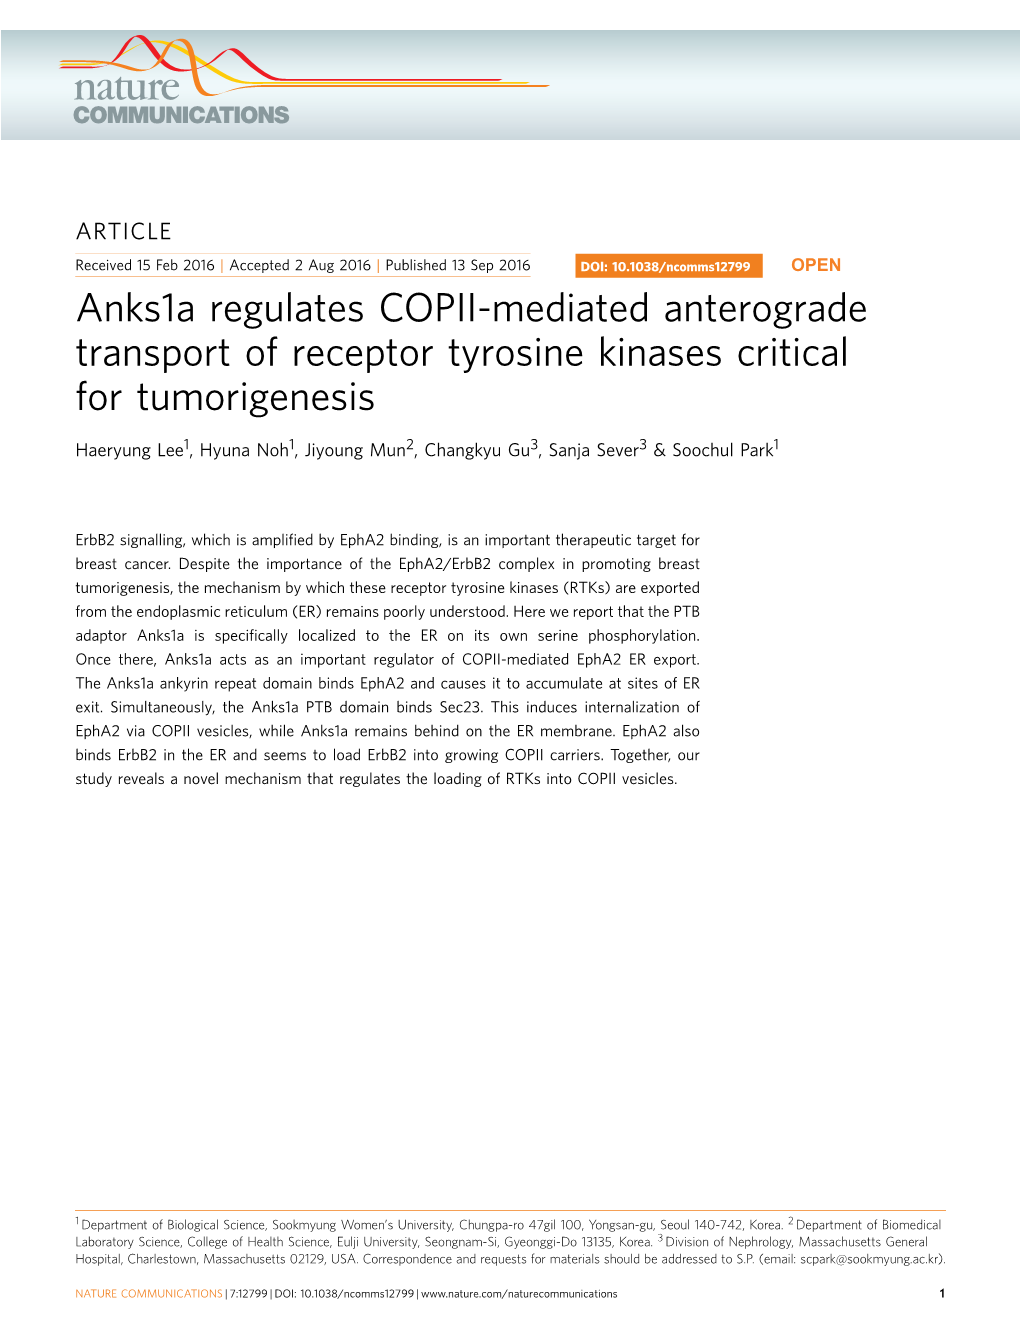 Anks1a Regulates COPII-Mediated Anterograde Transport of Receptor Tyrosine Kinases Critical for Tumorigenesis